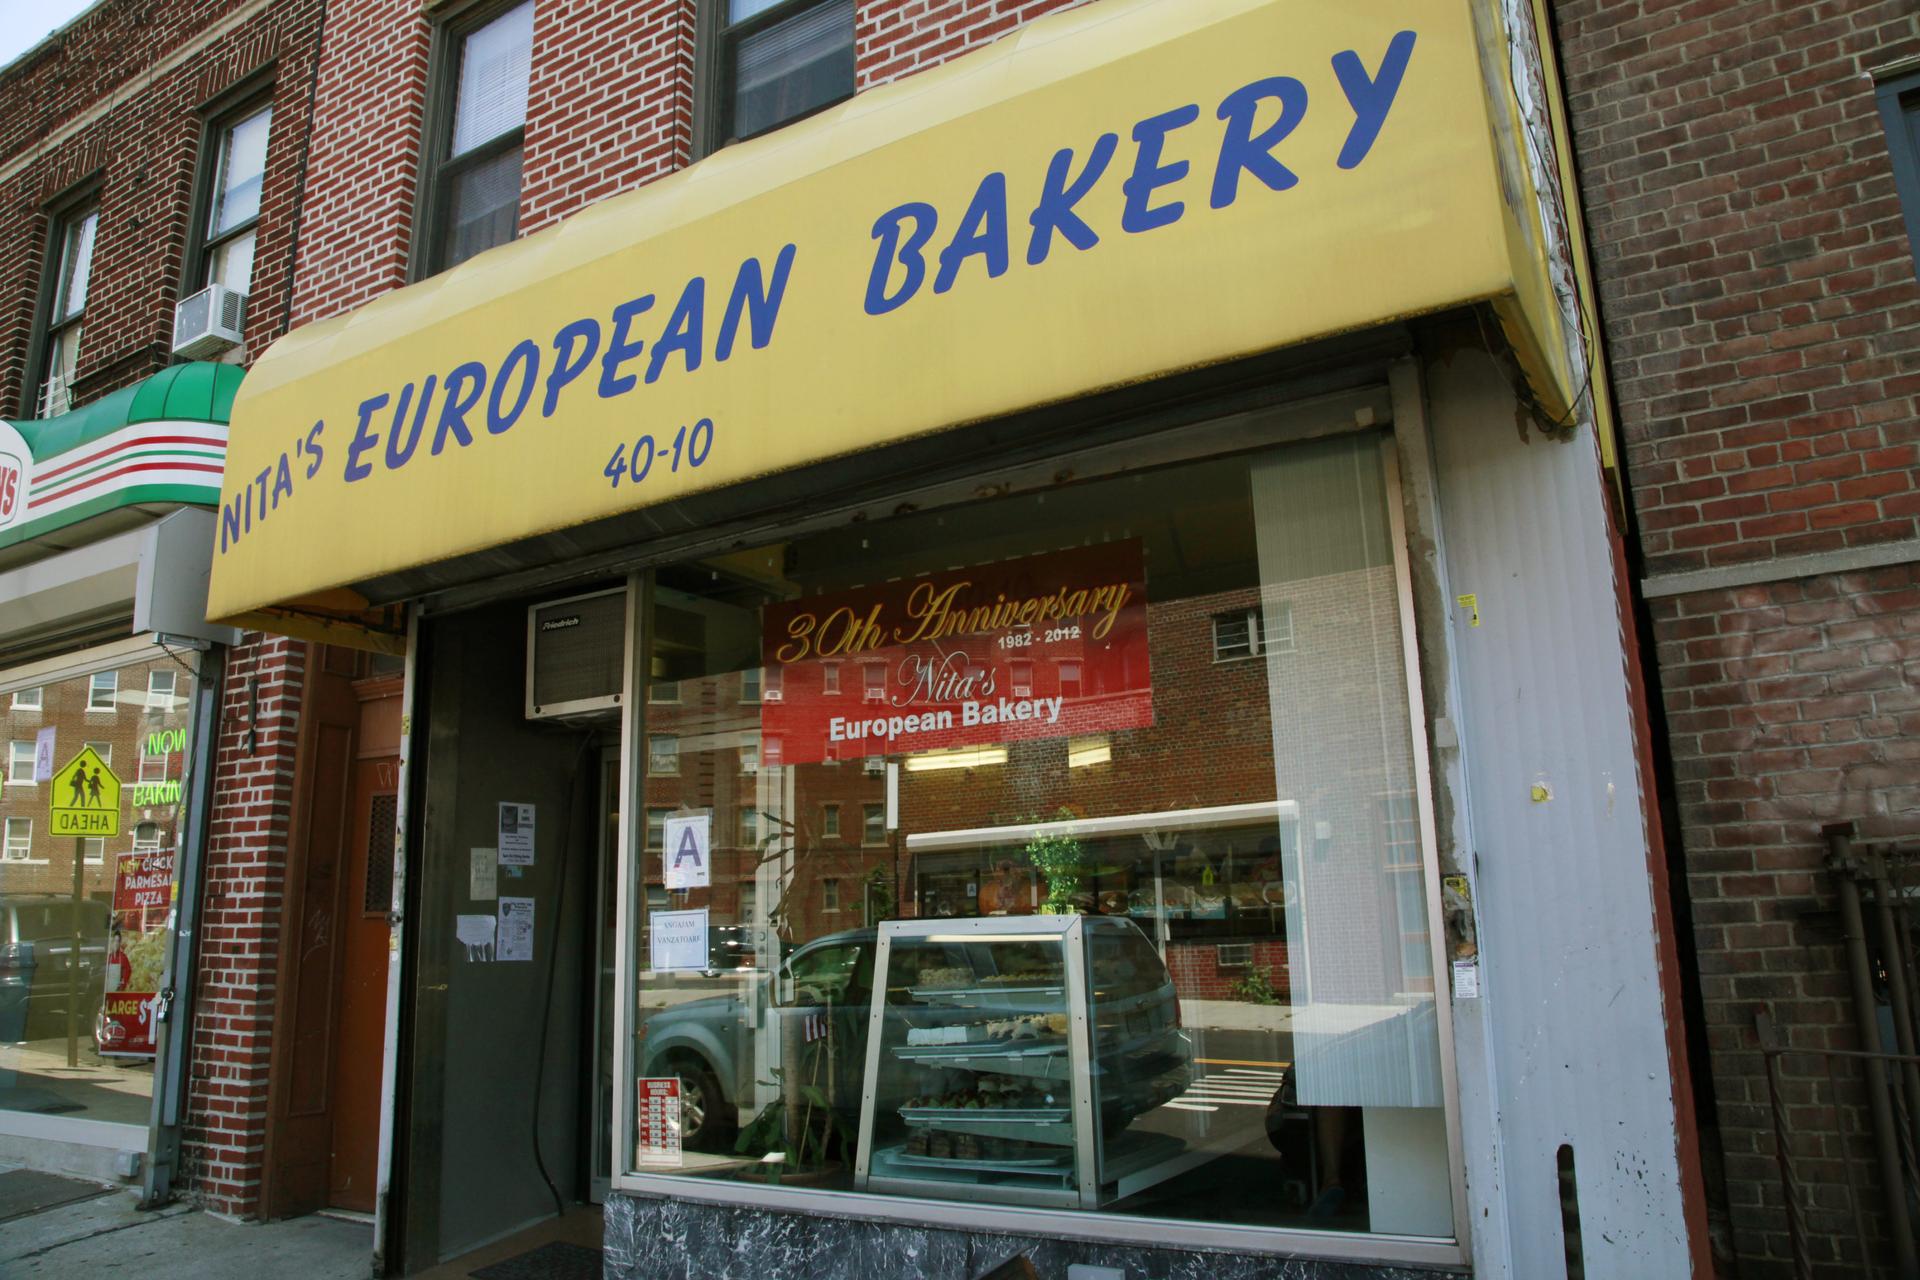 Nita&#039;s European Bakery exterior